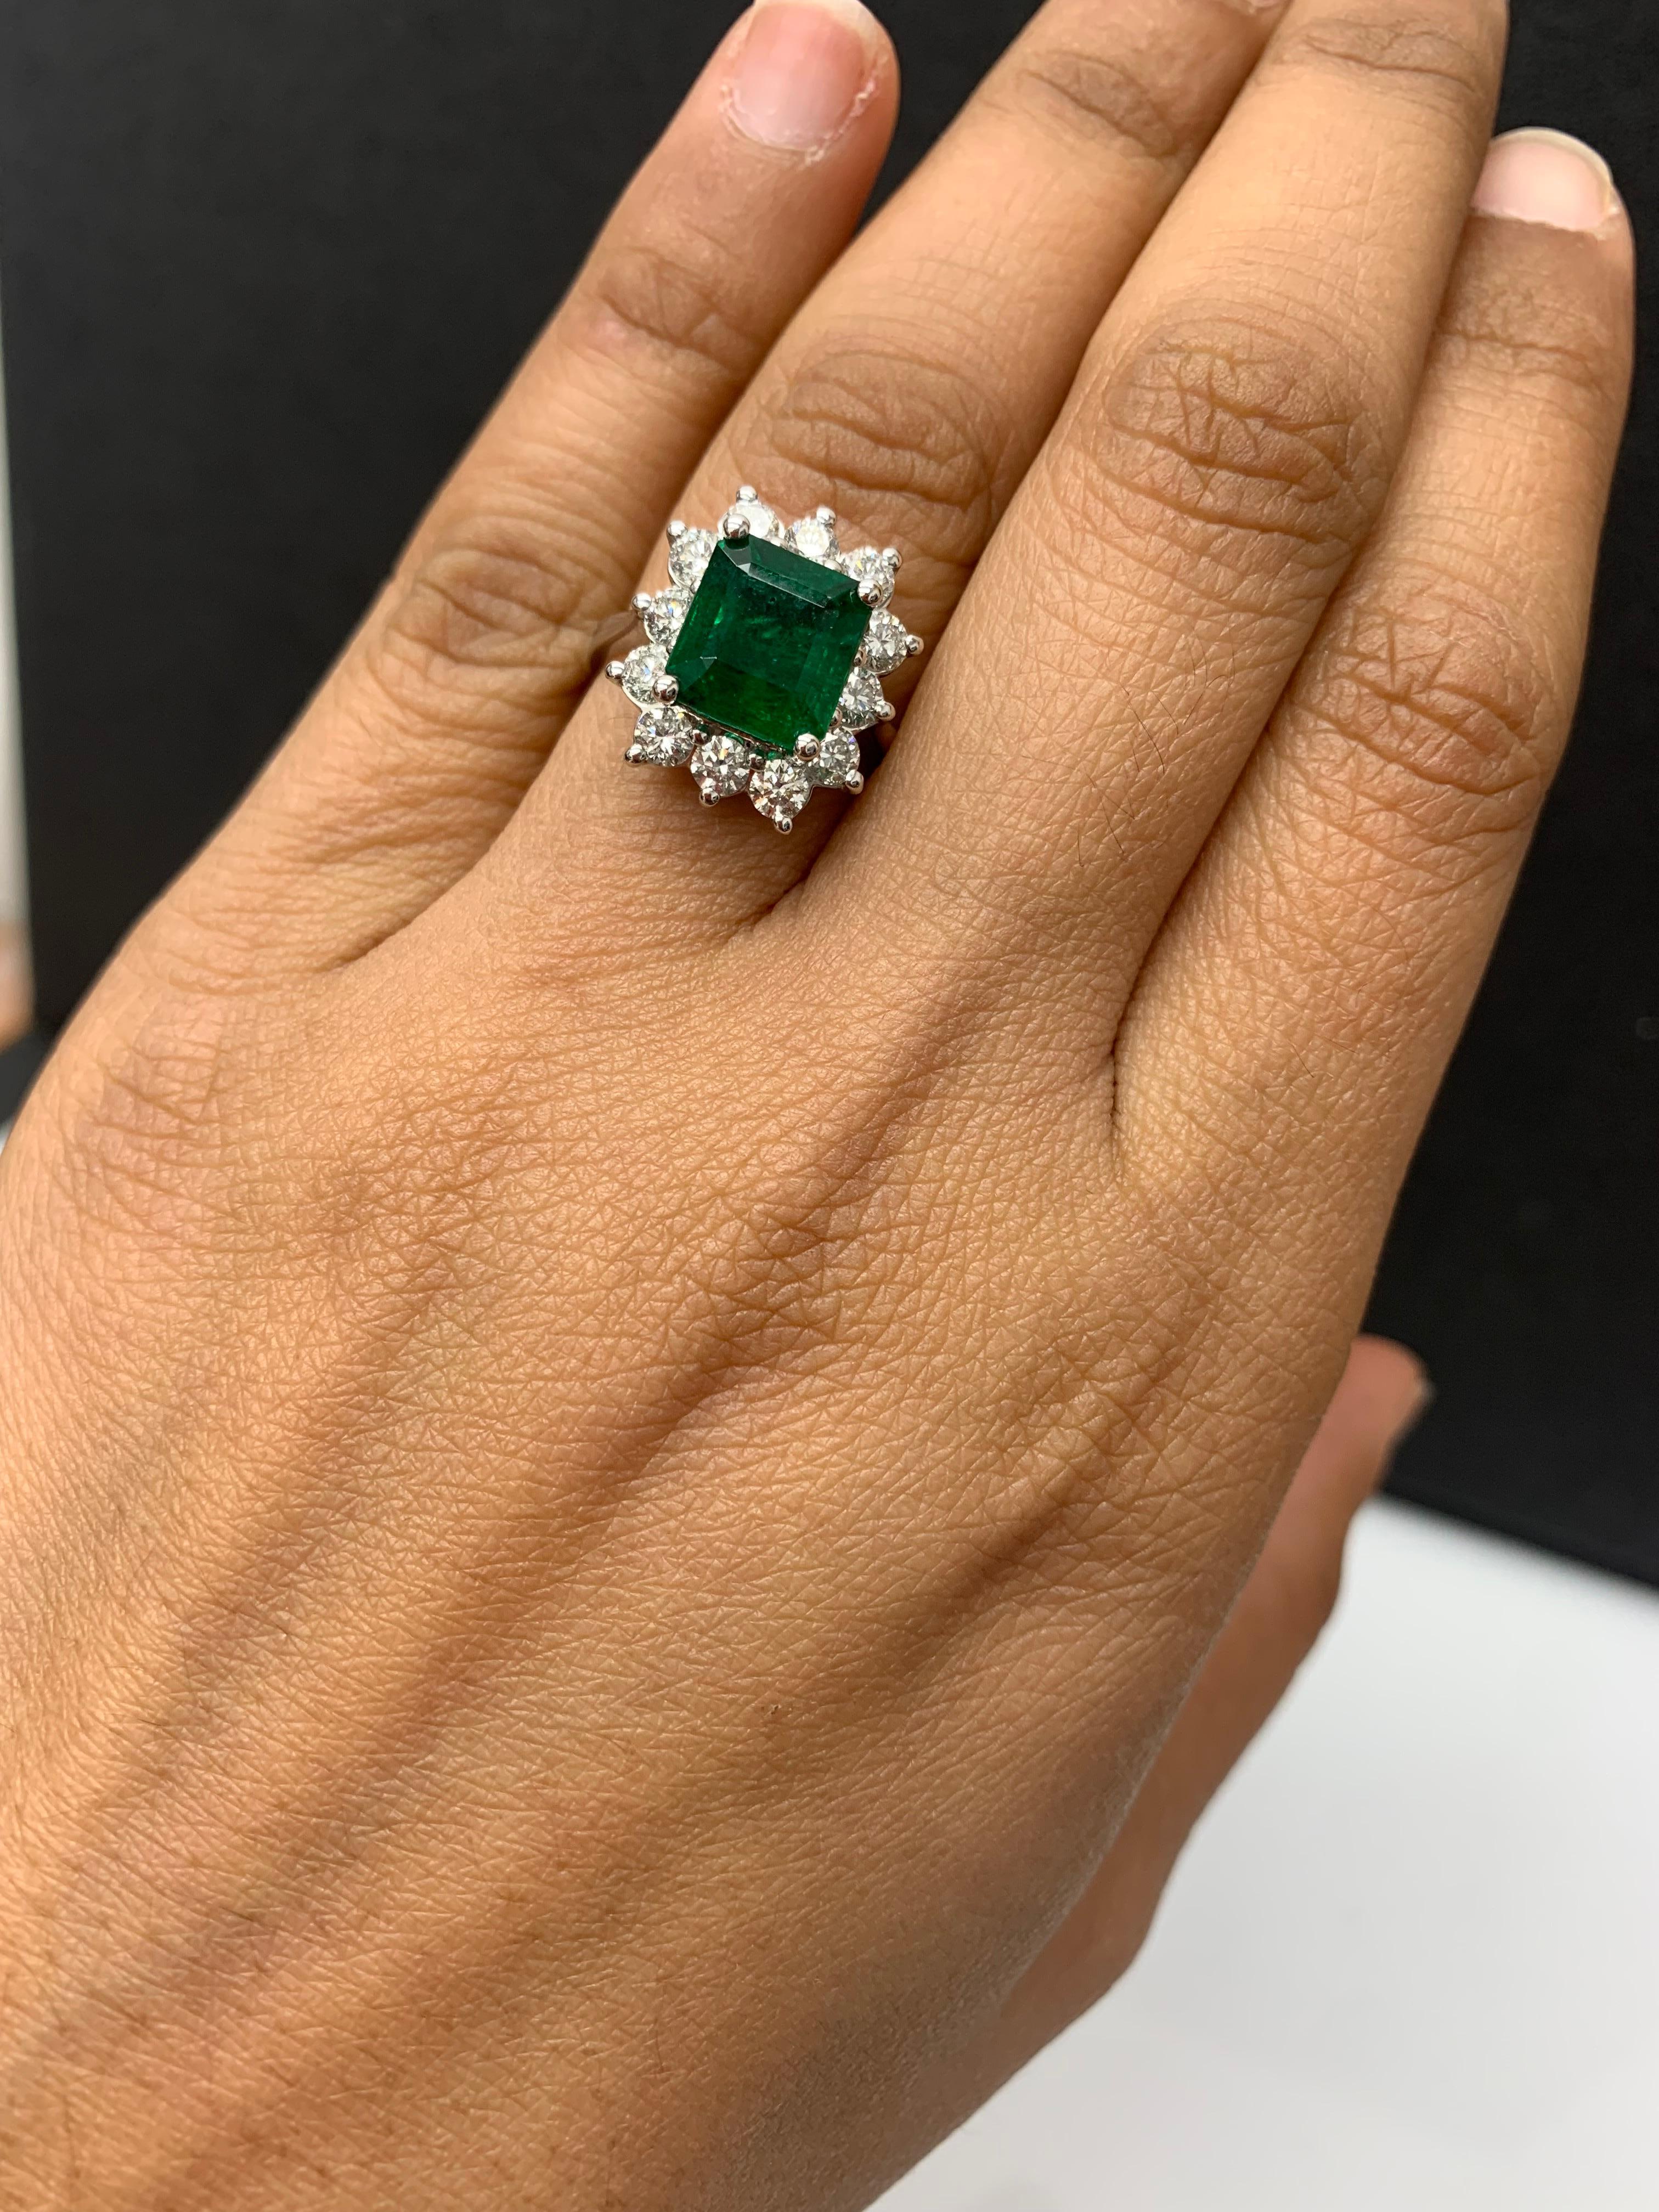 Certified 3.17 Carat Emerald Cut Emerald Diamond Ring in 14K White Gold For Sale 2